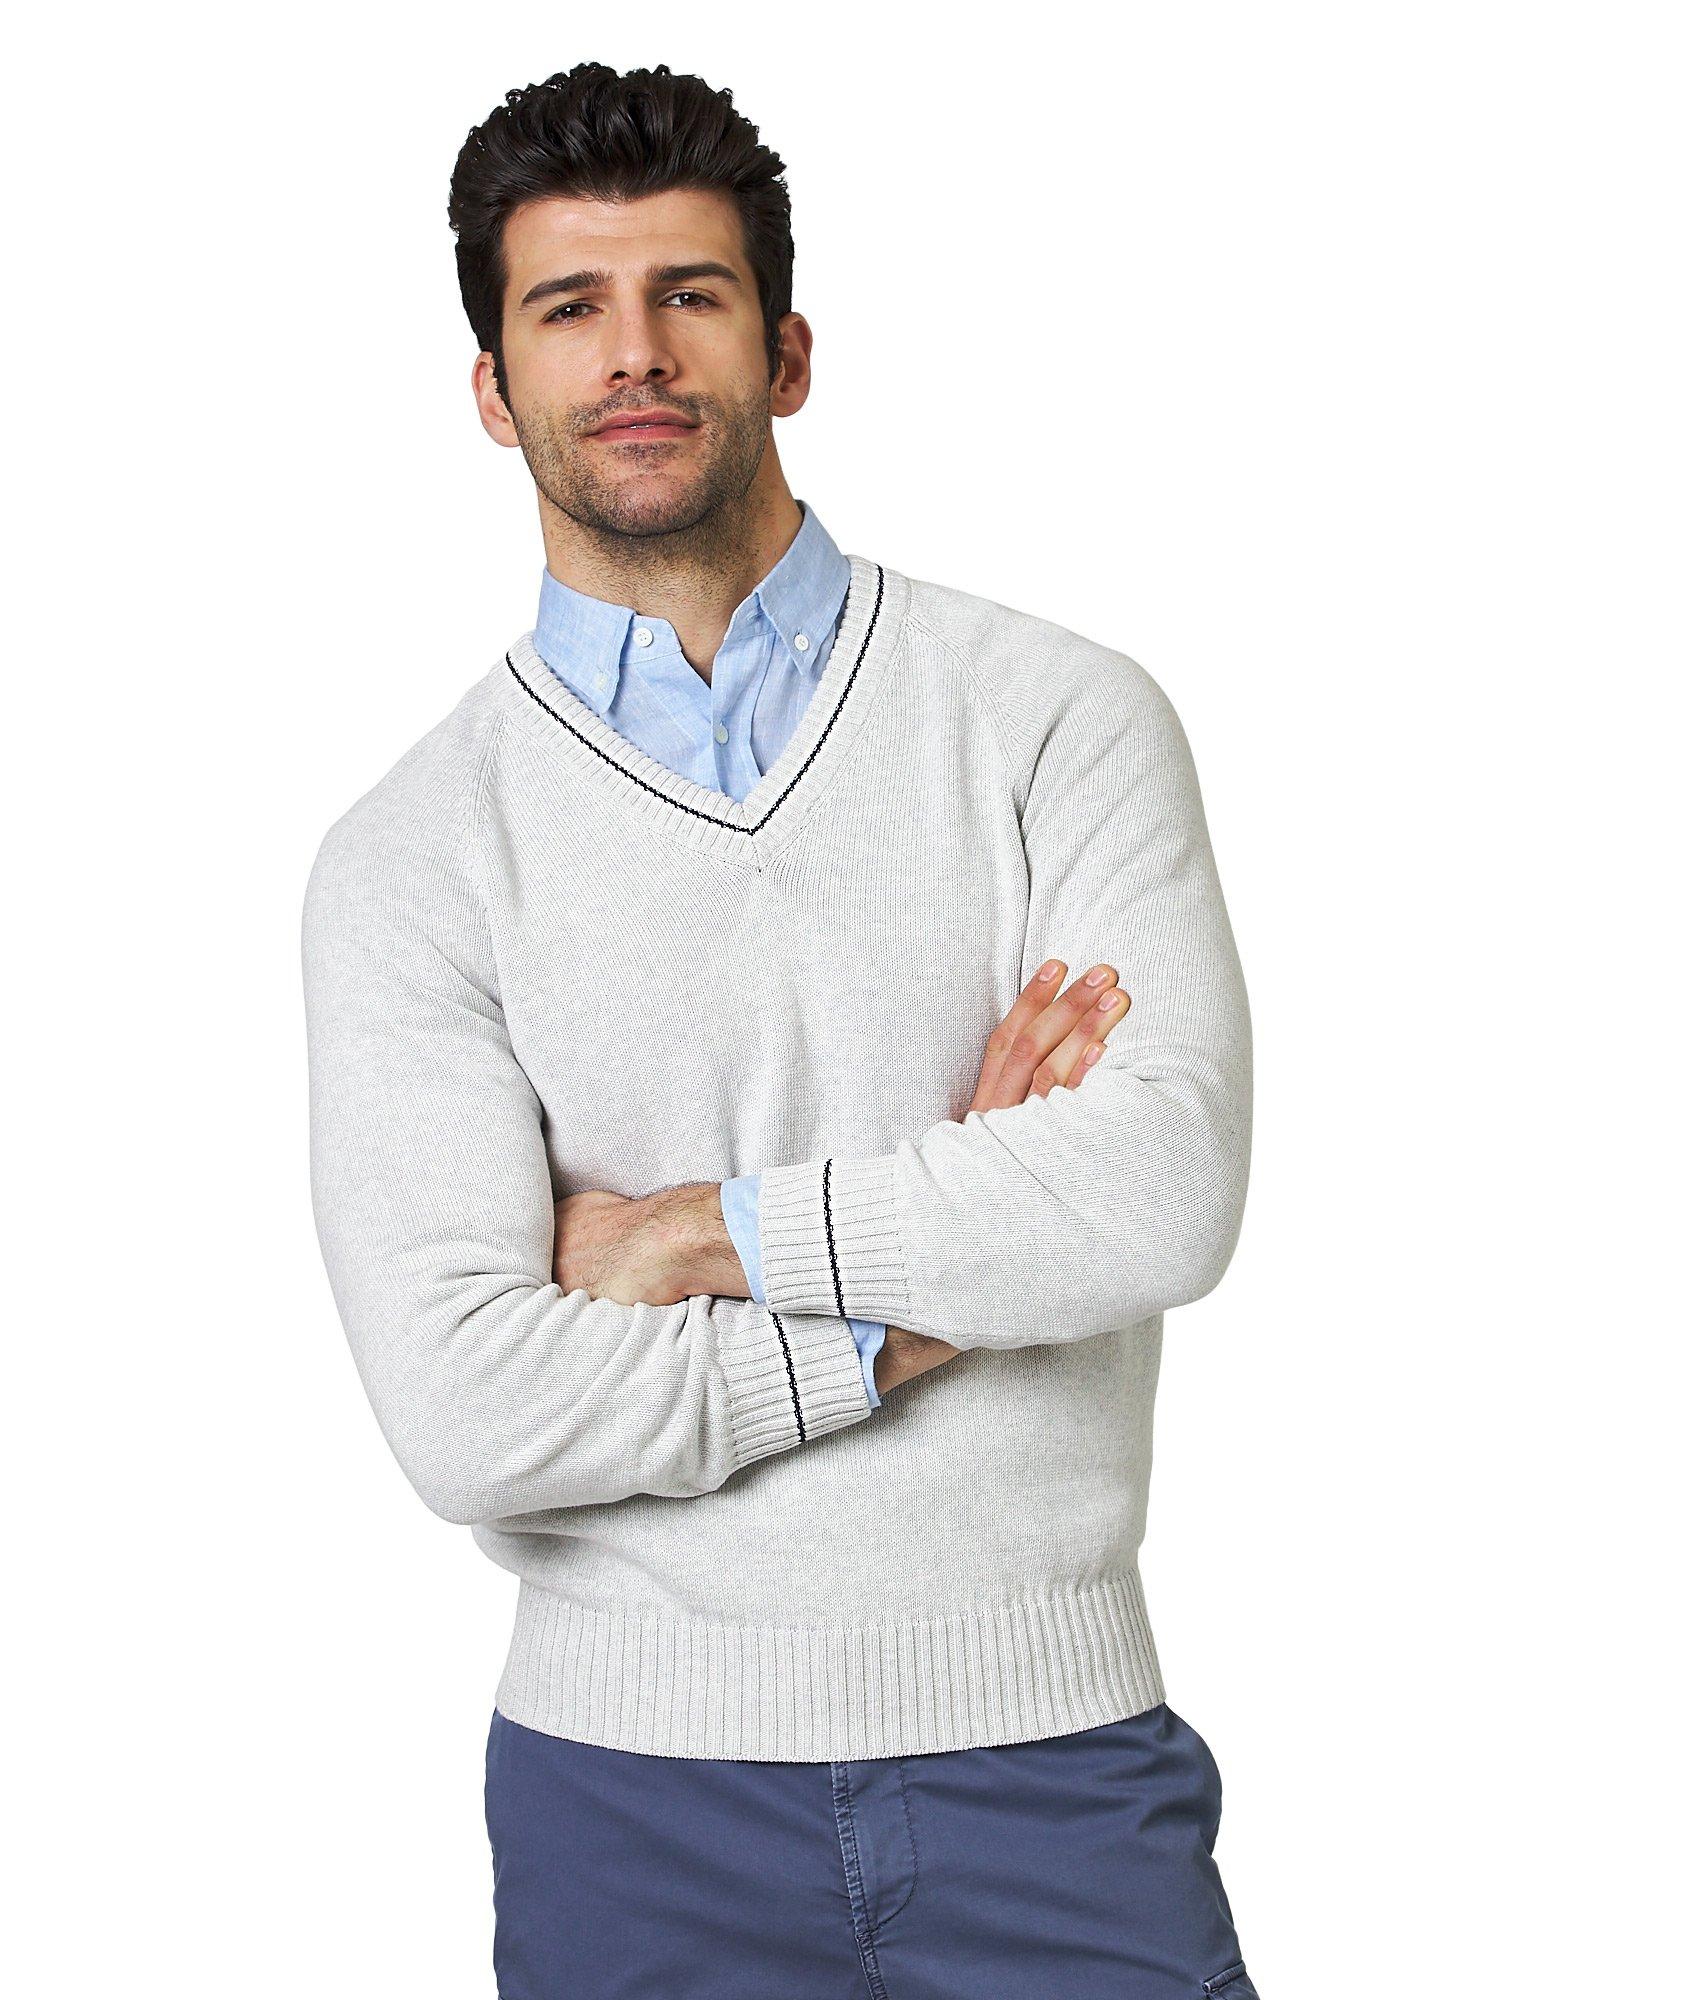 V-Neck Cotton Sweater image 0